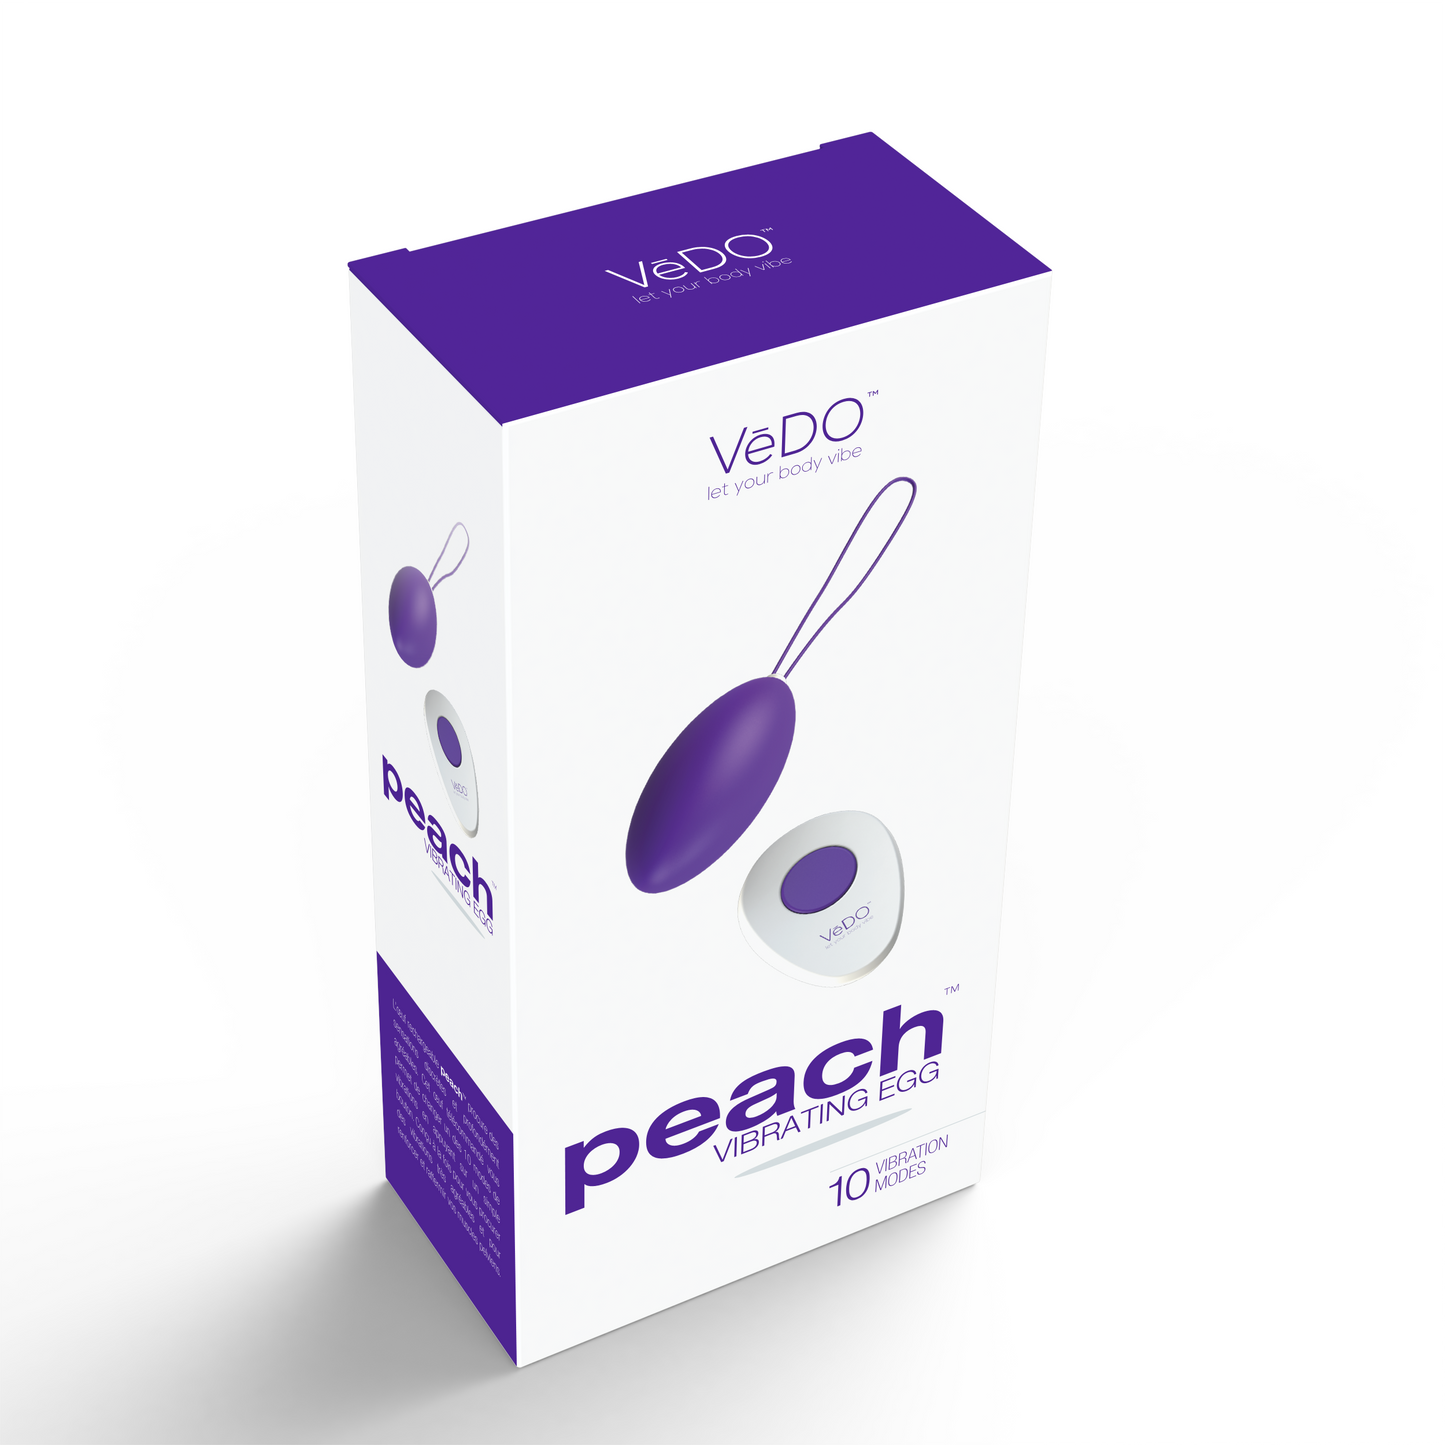 Peach Vibrating Egg - Into You Indigo VI-B0303